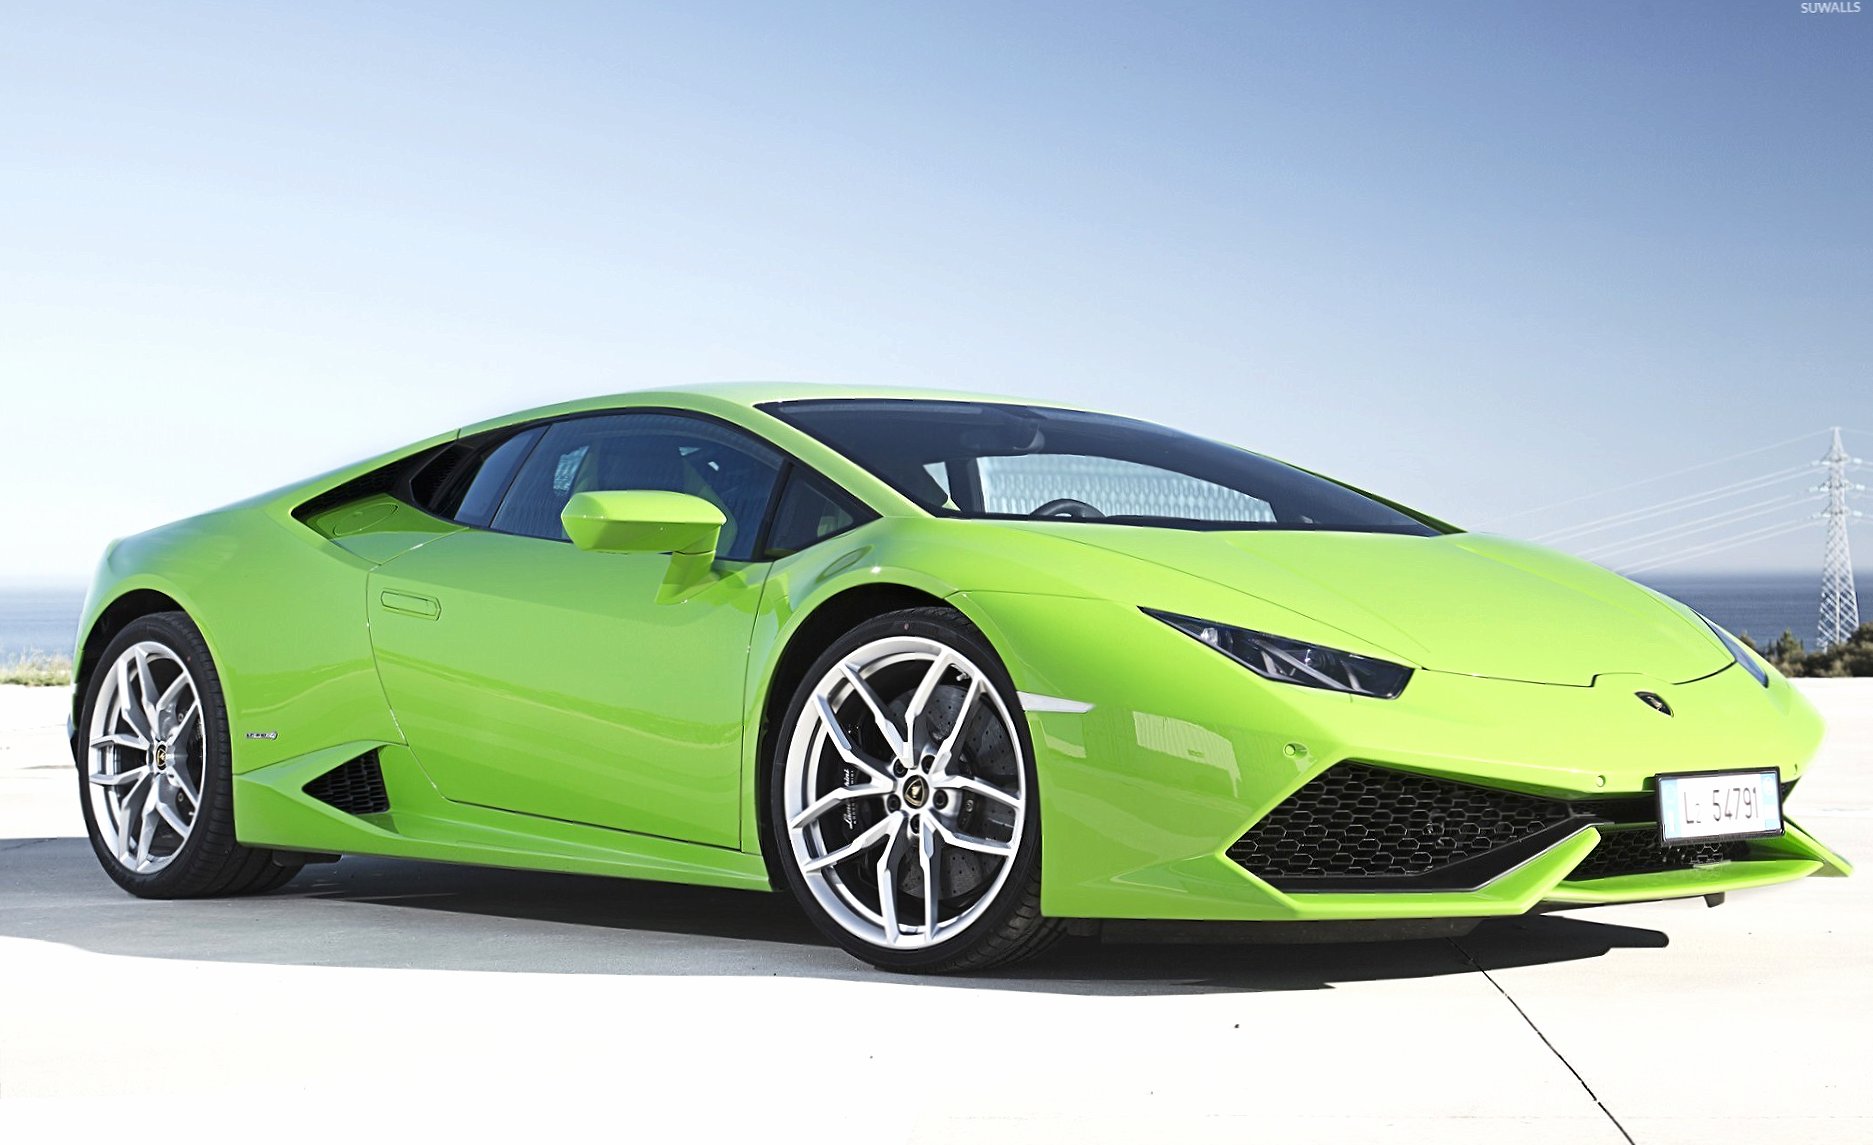 2014 Green Lamborghini Huracan at 640 x 960 iPhone 4 size wallpapers HD quality